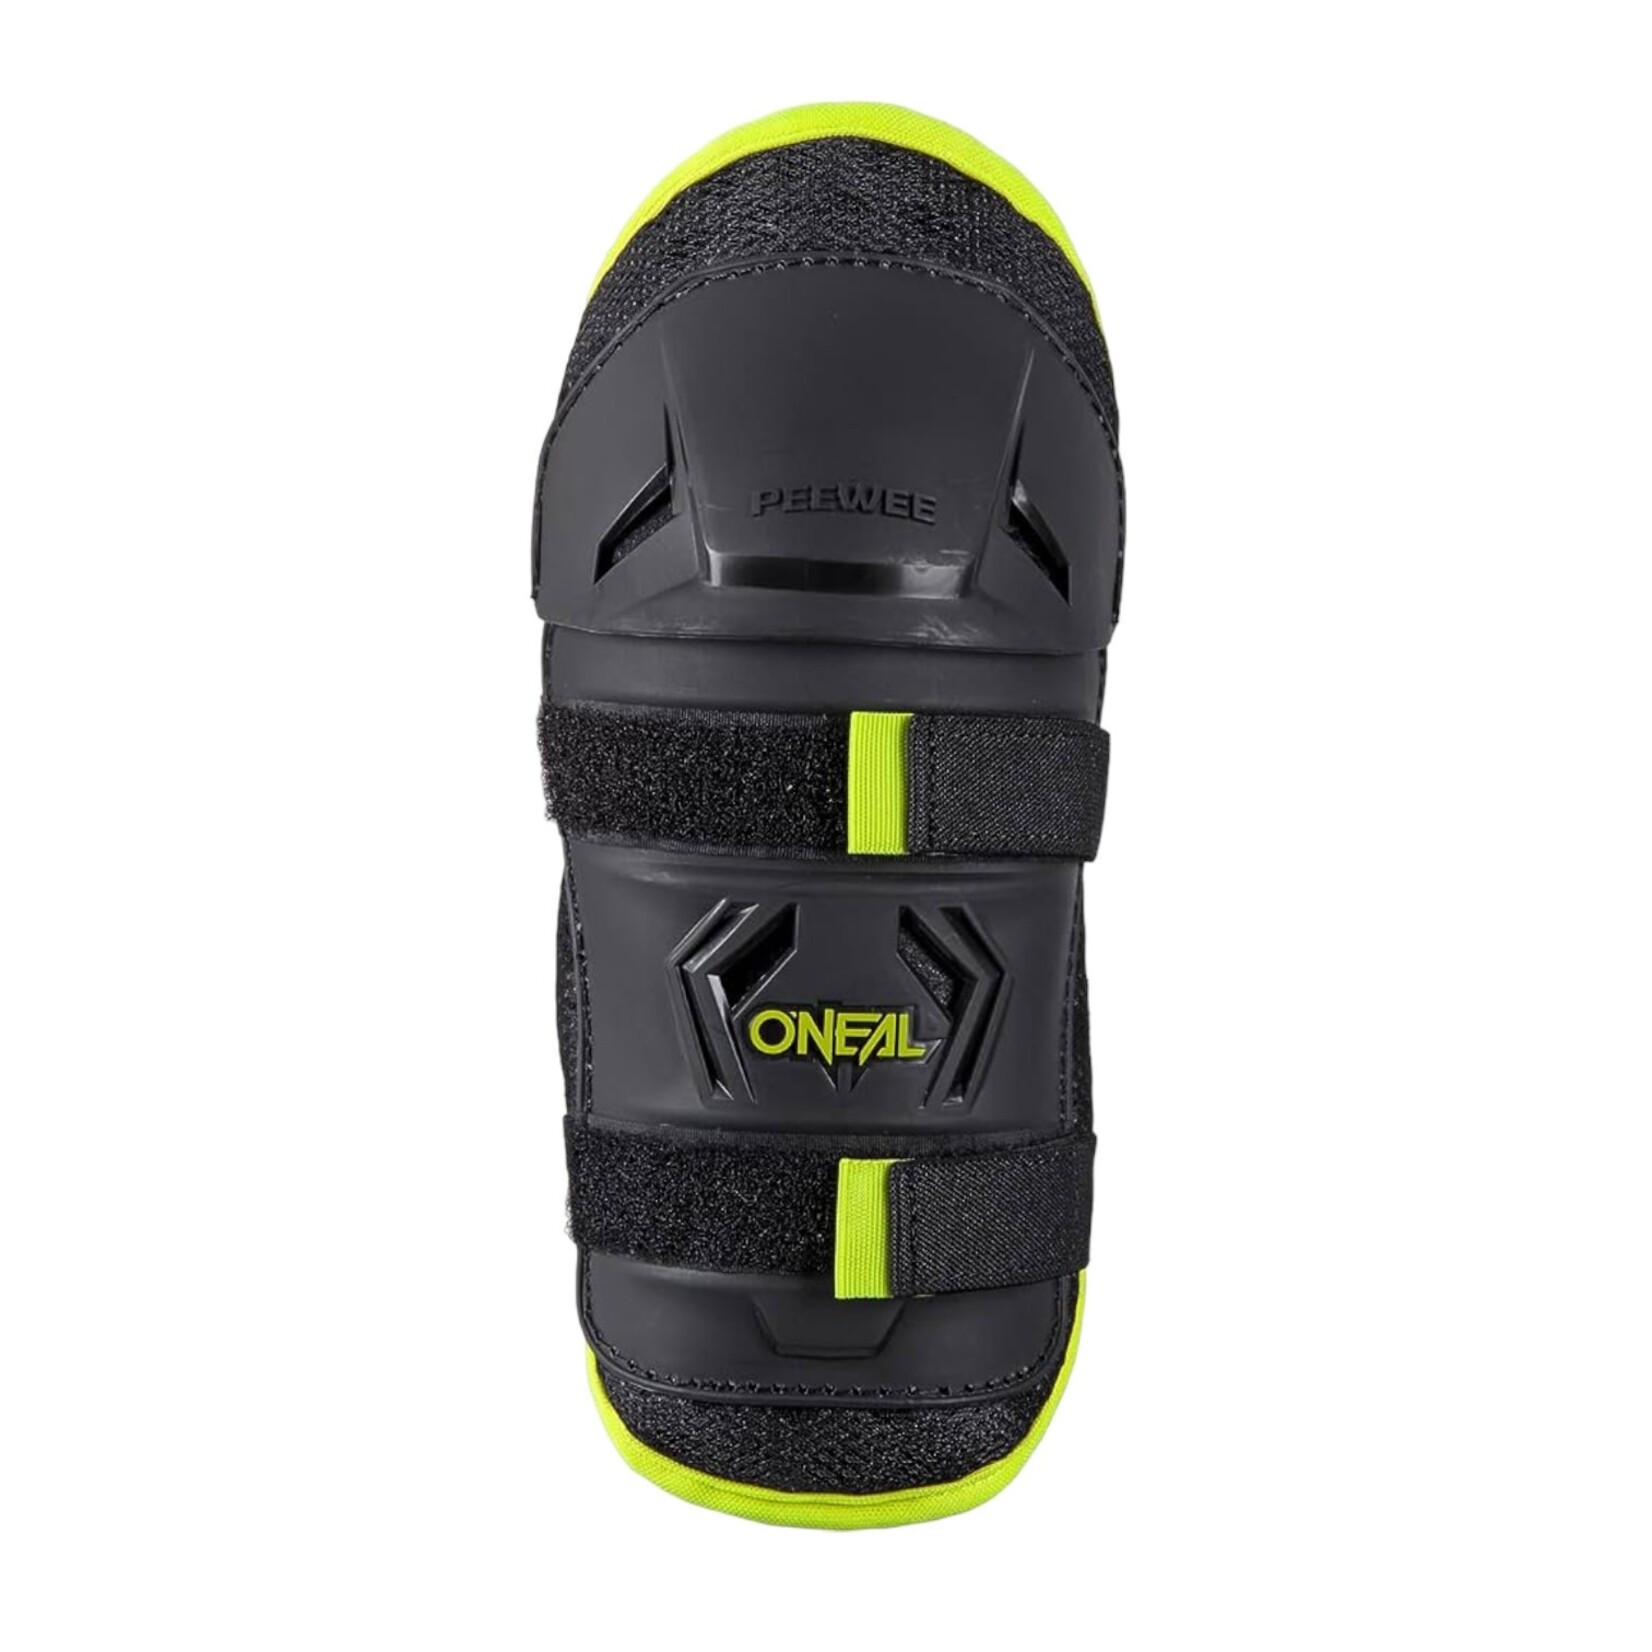 Oneal Kids knie bescherming XS - S